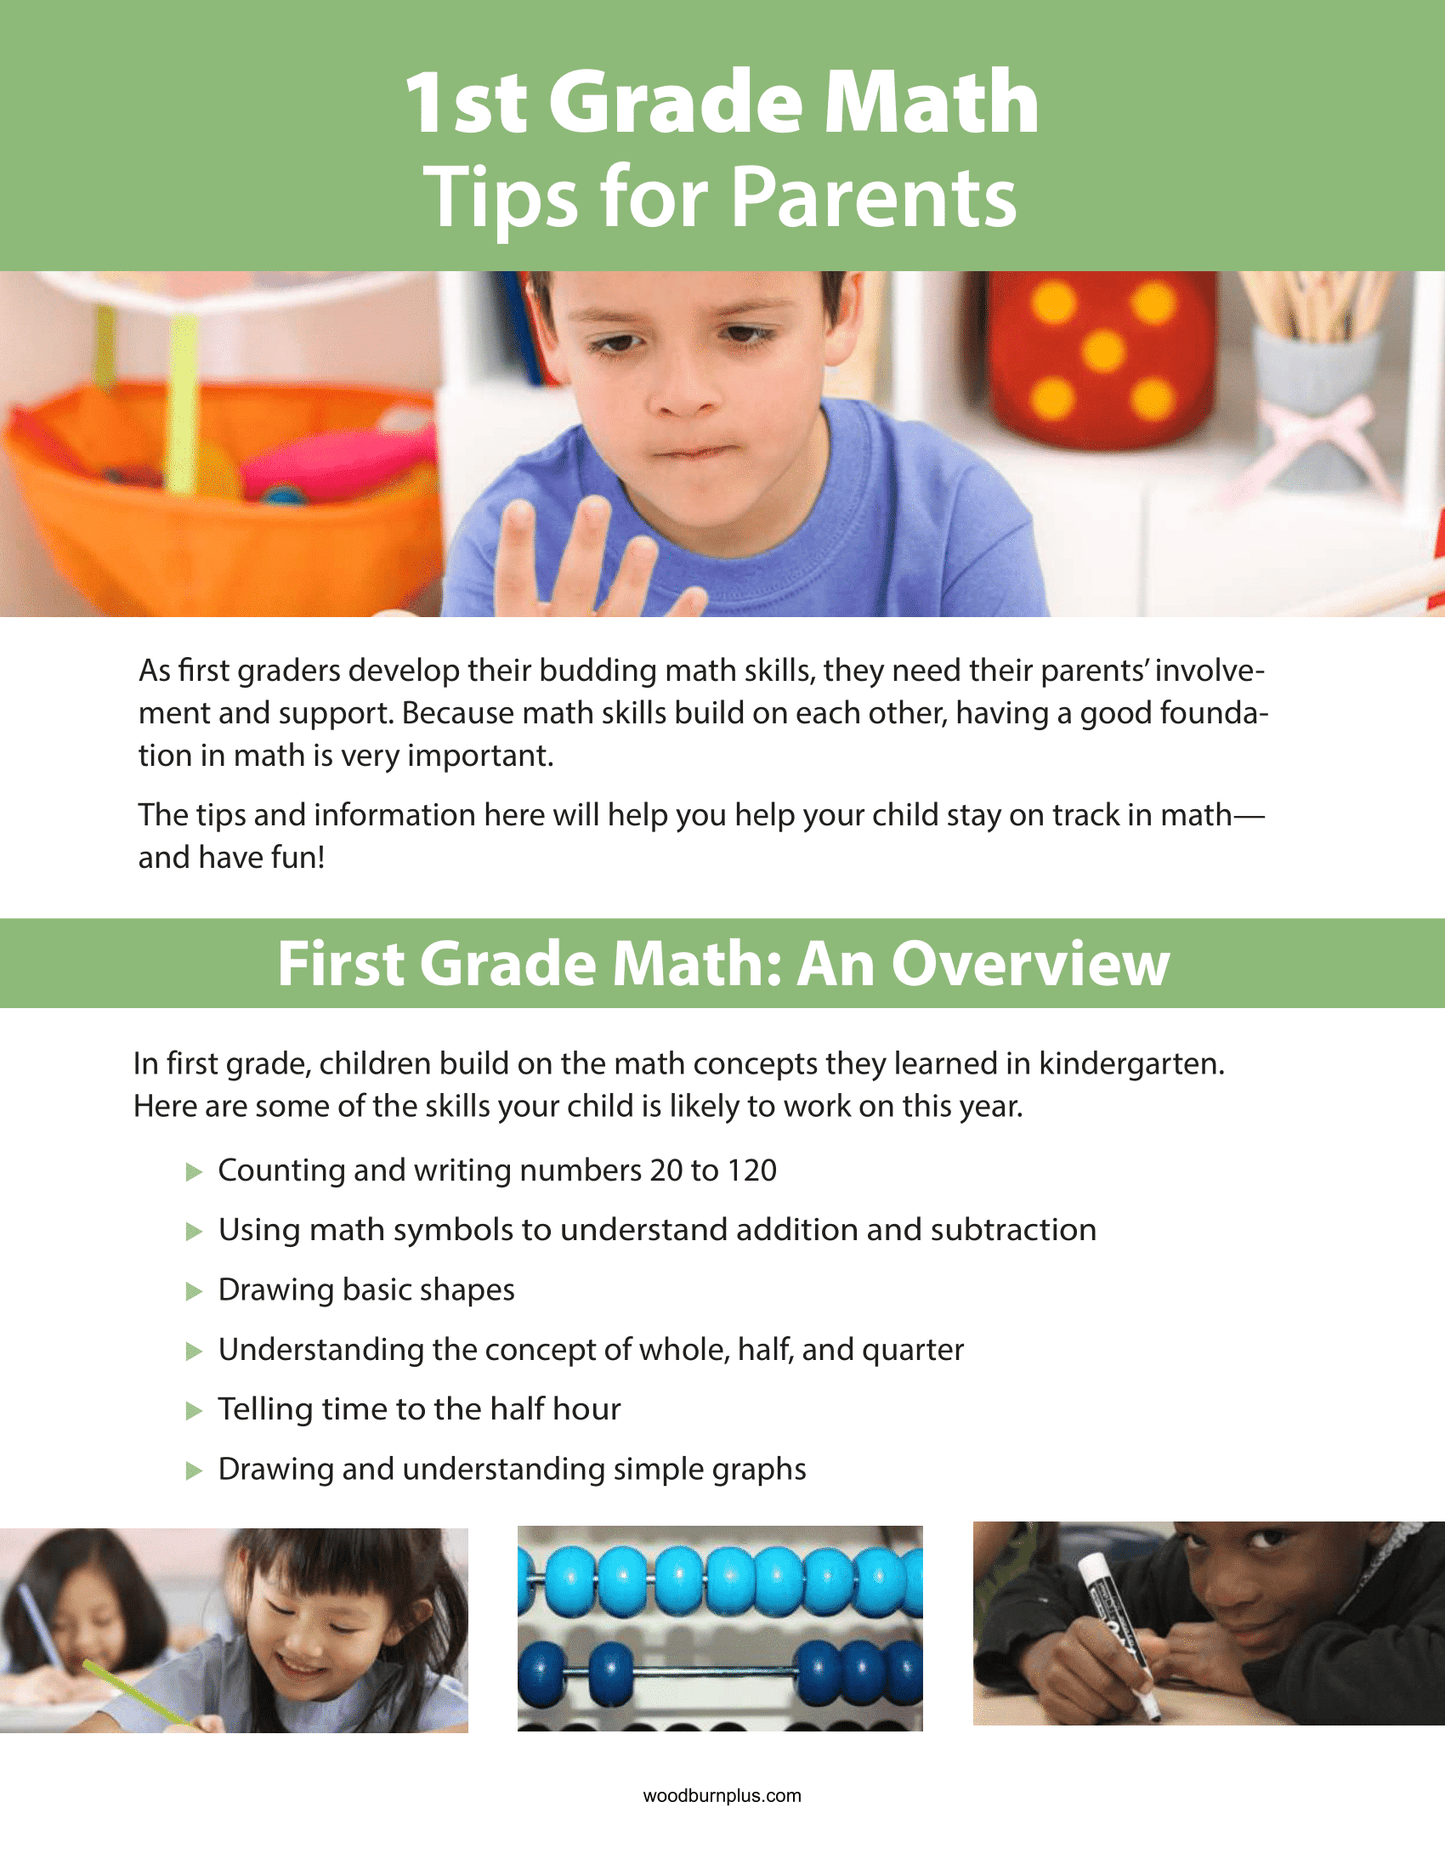 1st Grade Math - Tips for Parents